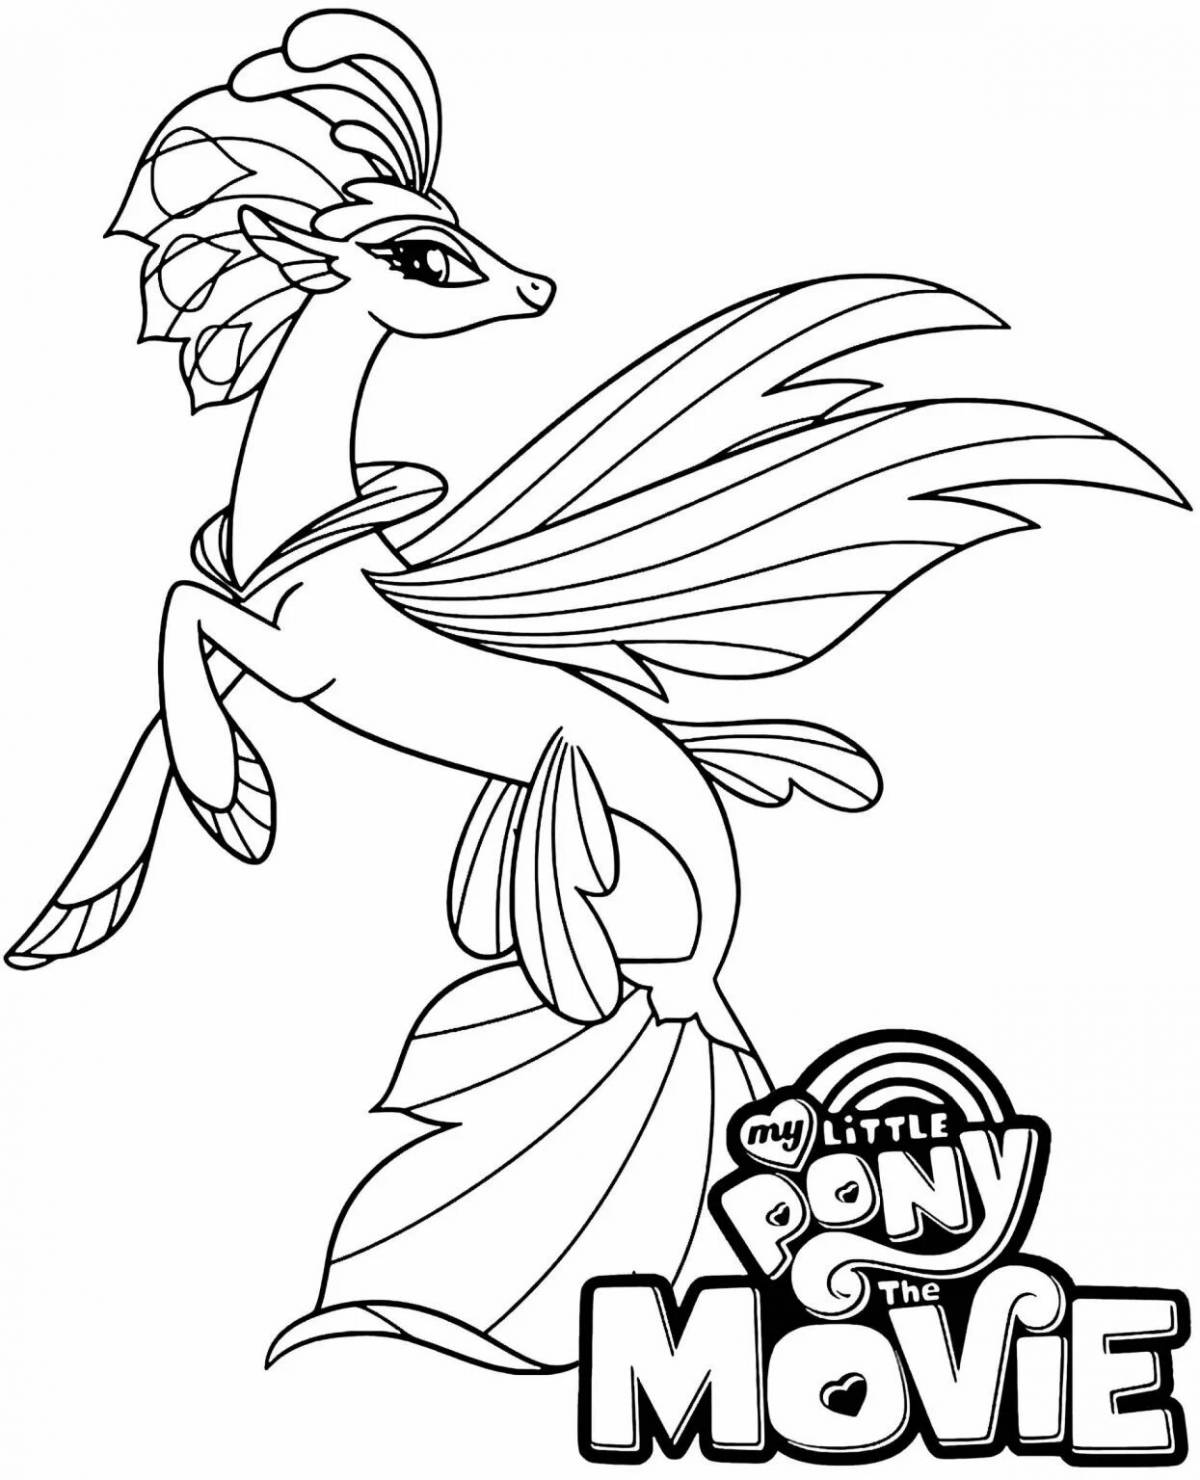 Magic coloring malital pony mermaid